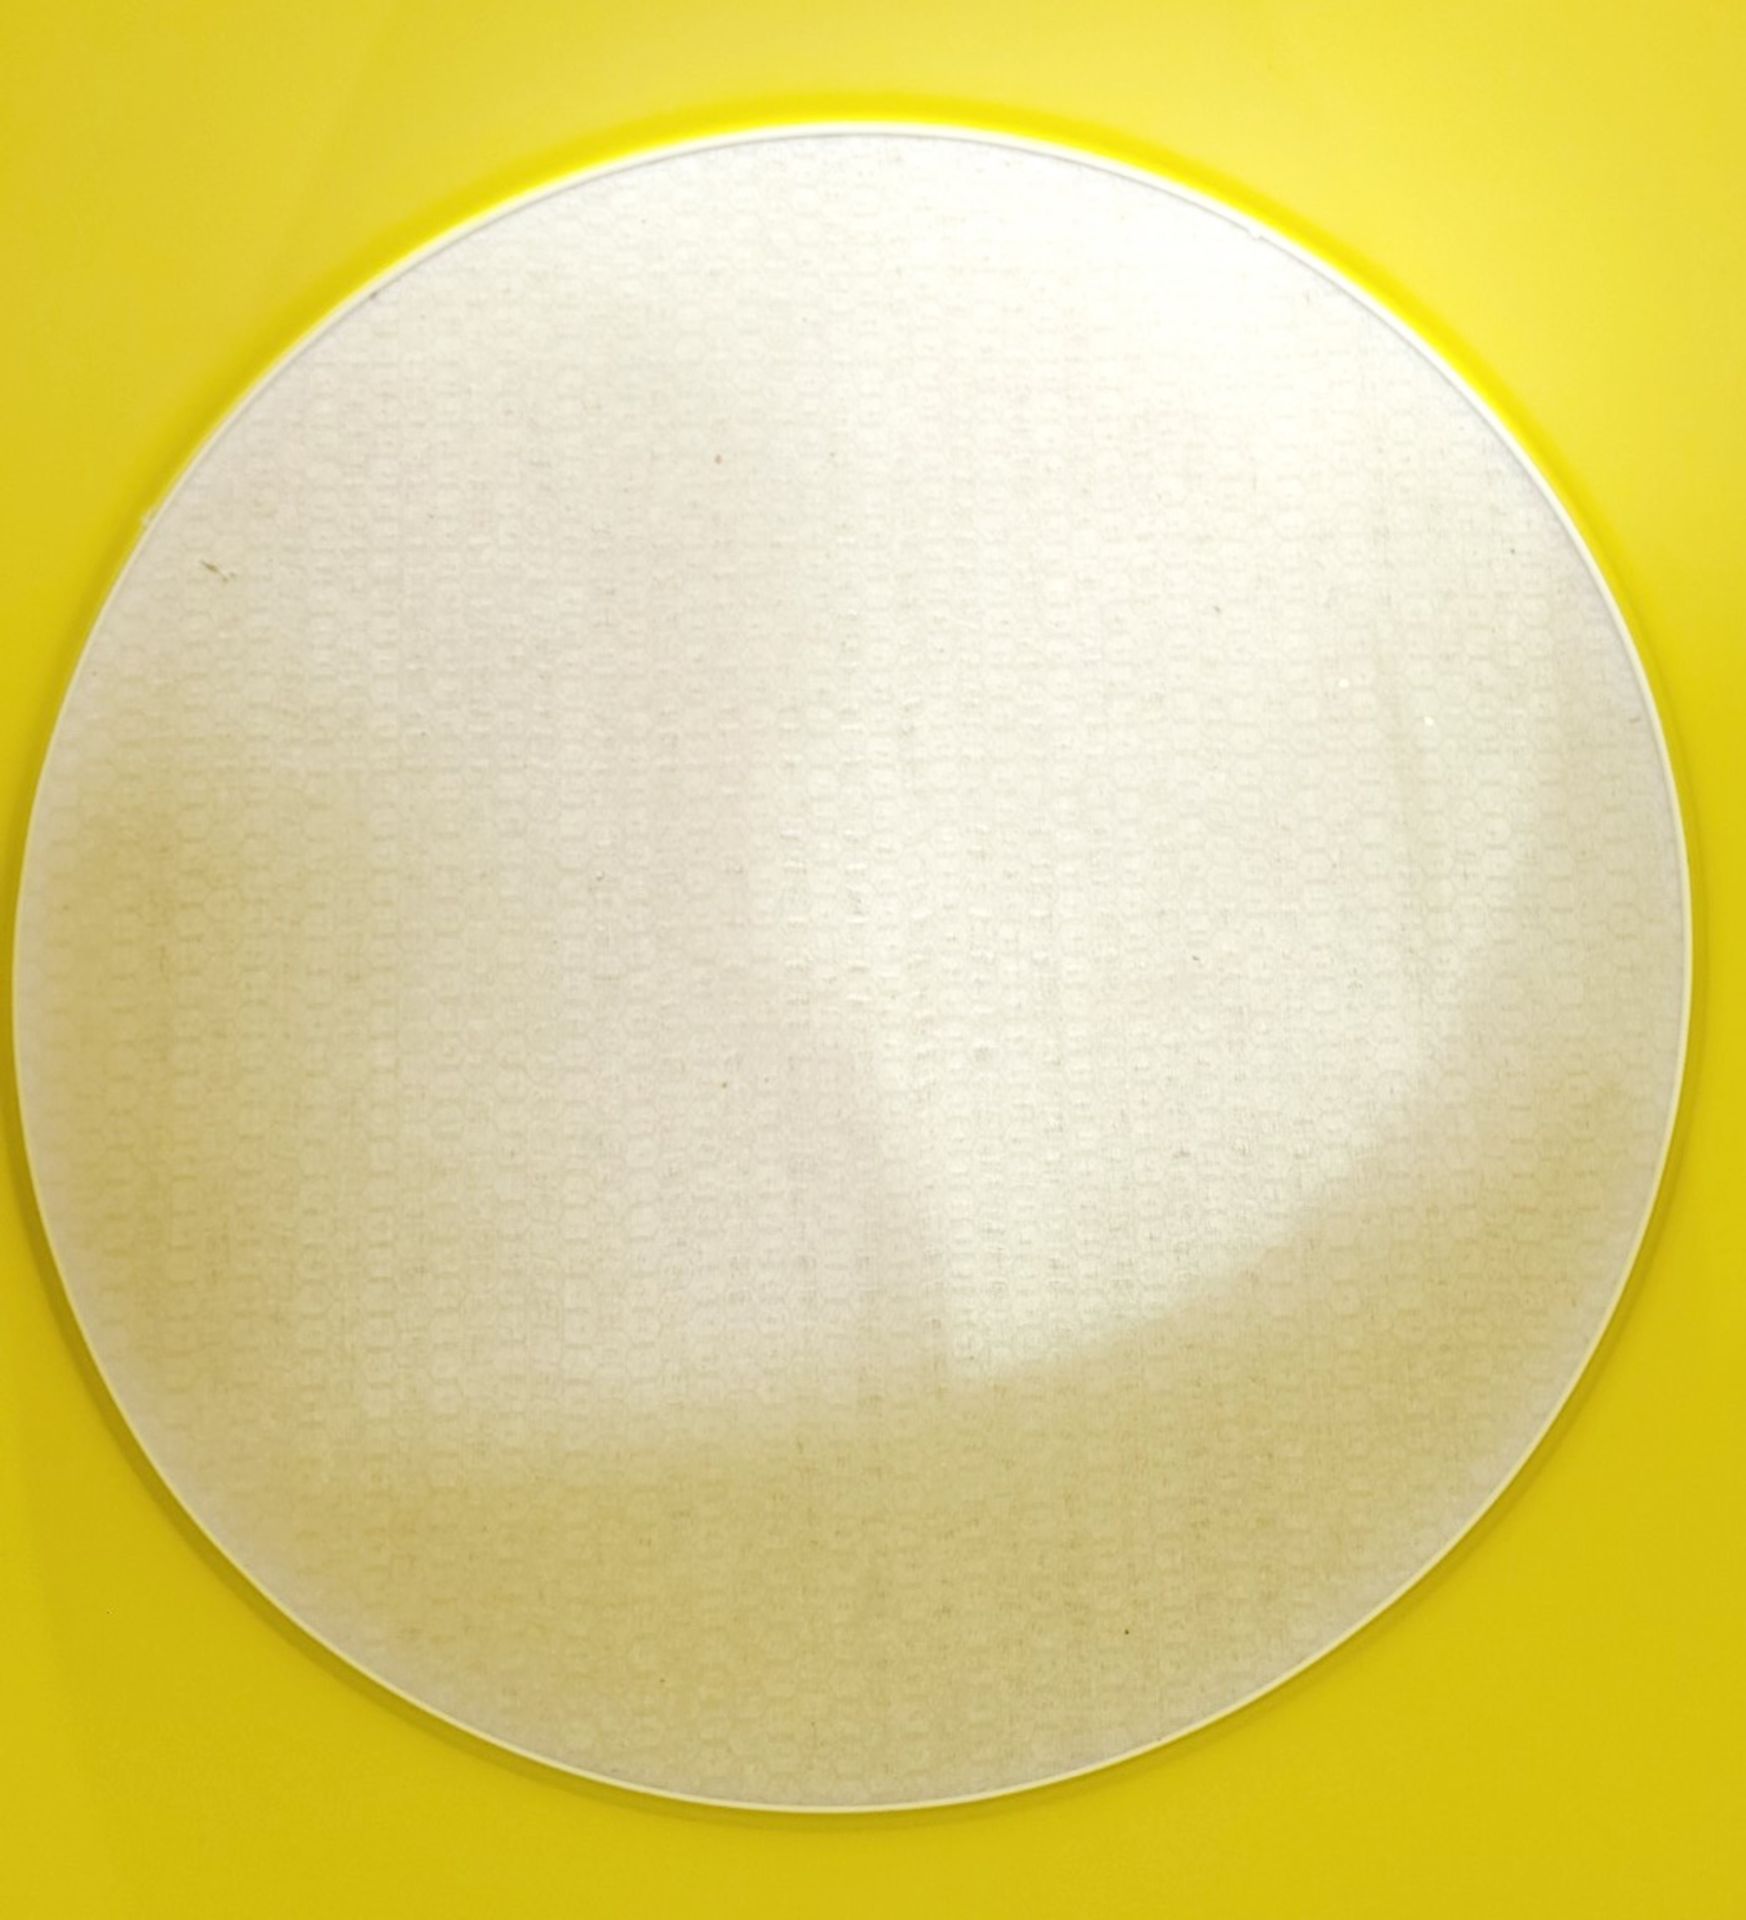 1 x BLUESUNTREE Large Scandi Metal White Pendant Drum Lamp Shape With Bright Yellow Interior 50cm - Image 3 of 5